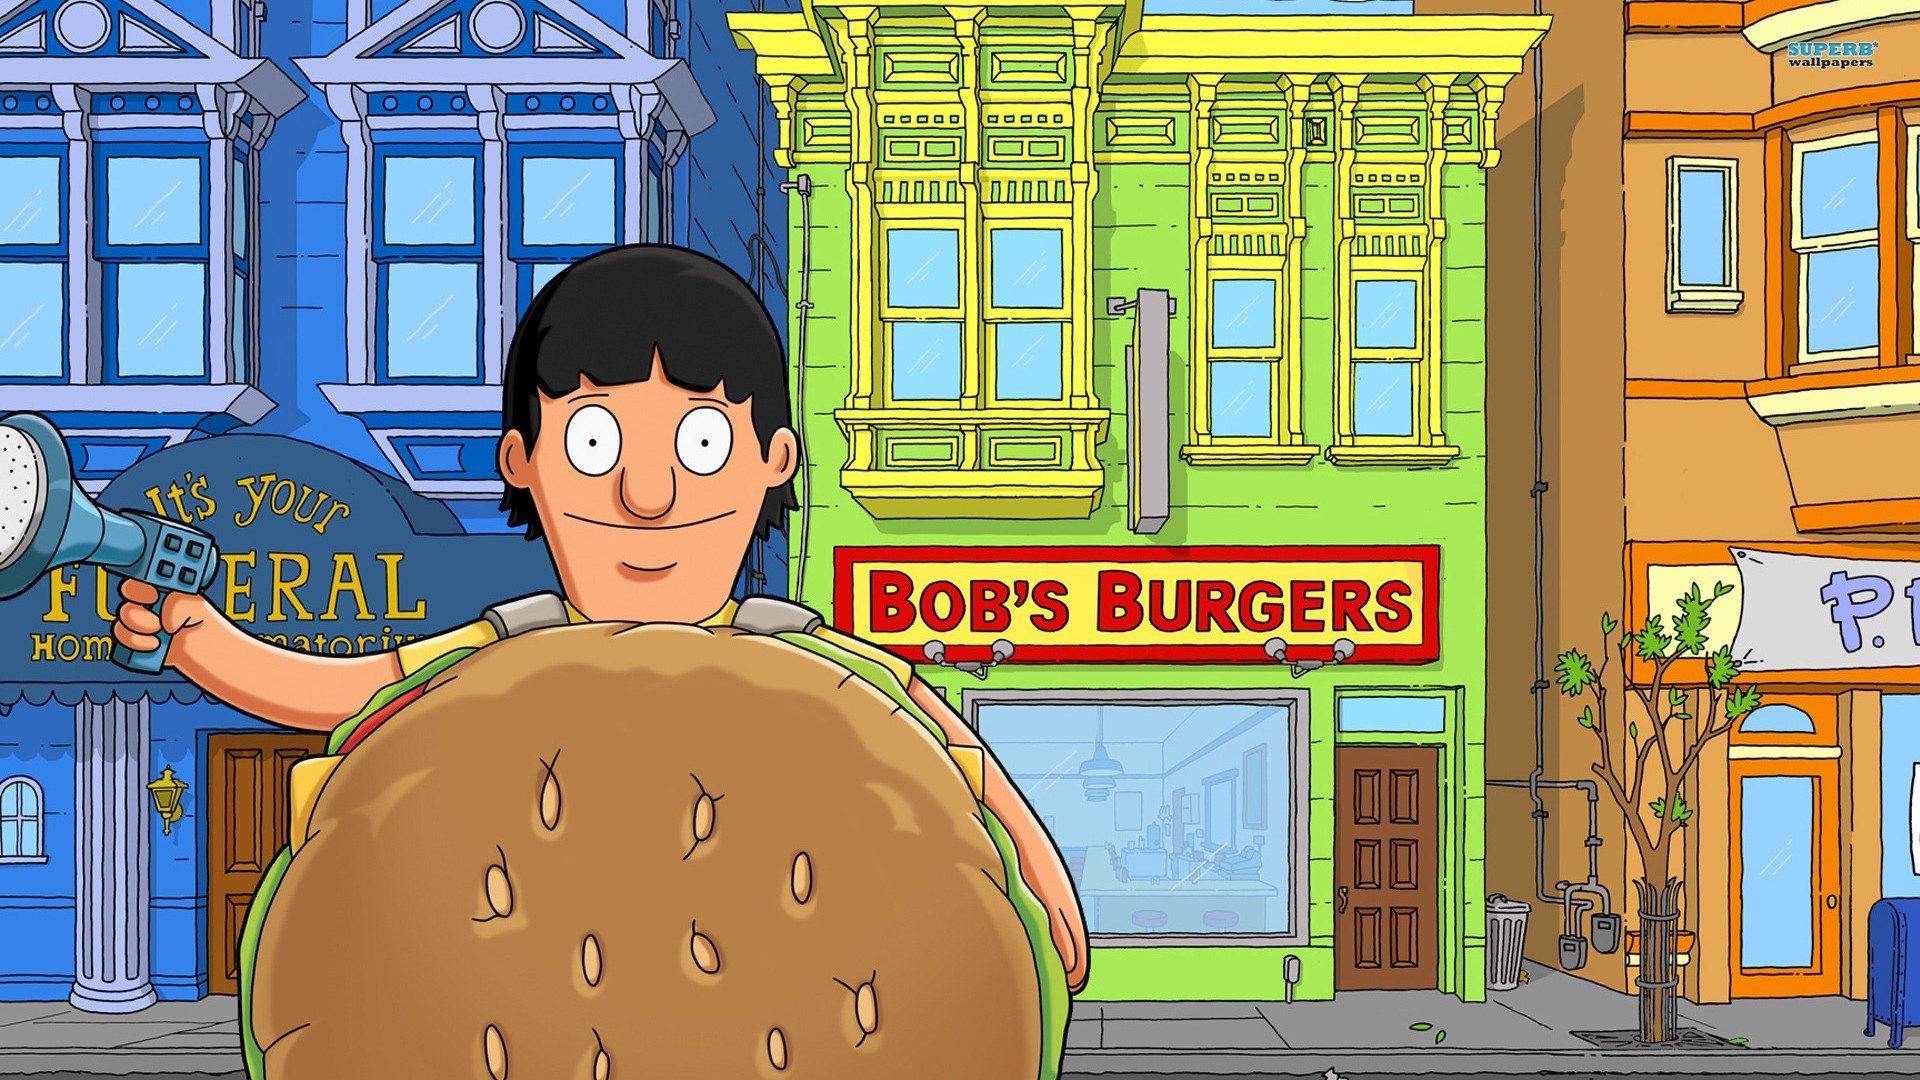 bobs burgers image for desktop background burgers category